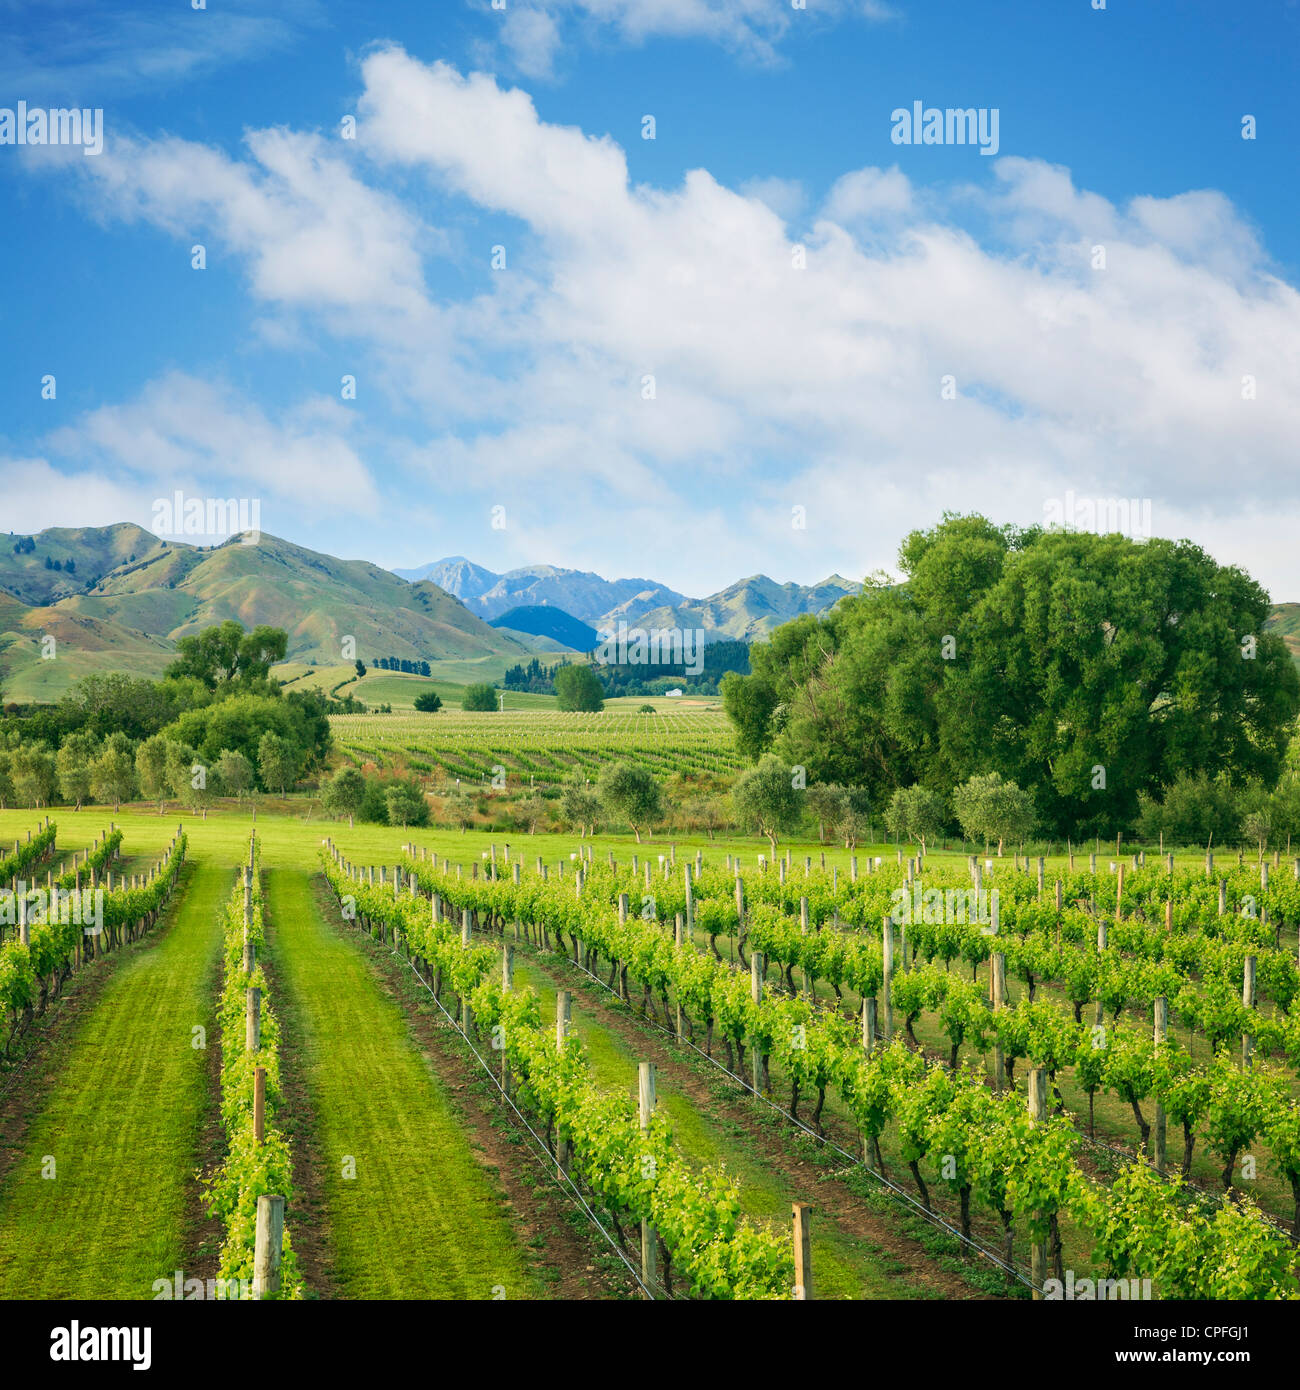 Beautiful vineyard tucked up under the mountains, in New Zealand's Marlborough wine growing region. Stock Photo